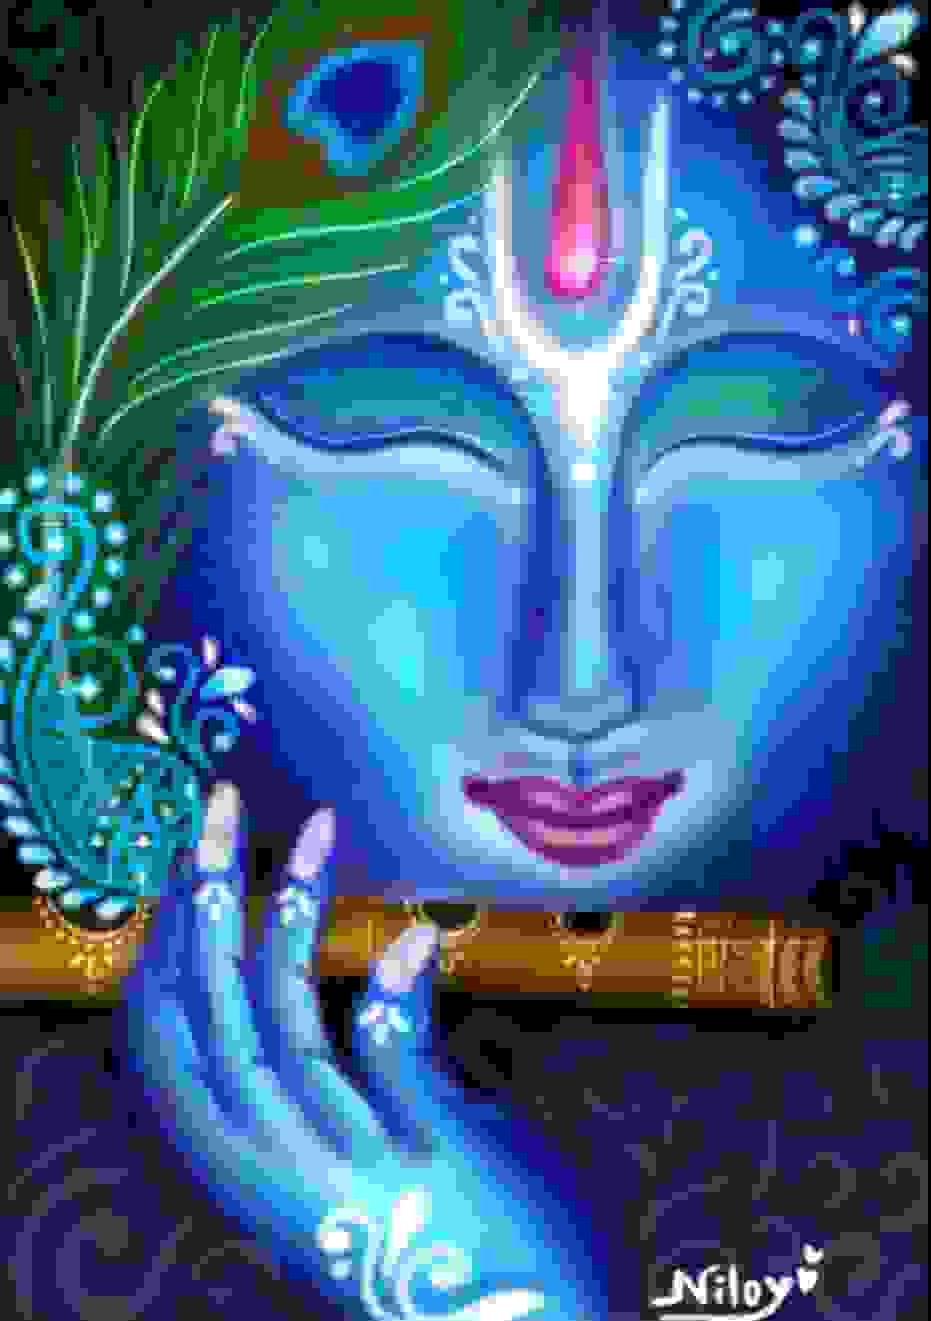 Painting Of Krishna In Digital Art Size 30cm Sq Cm